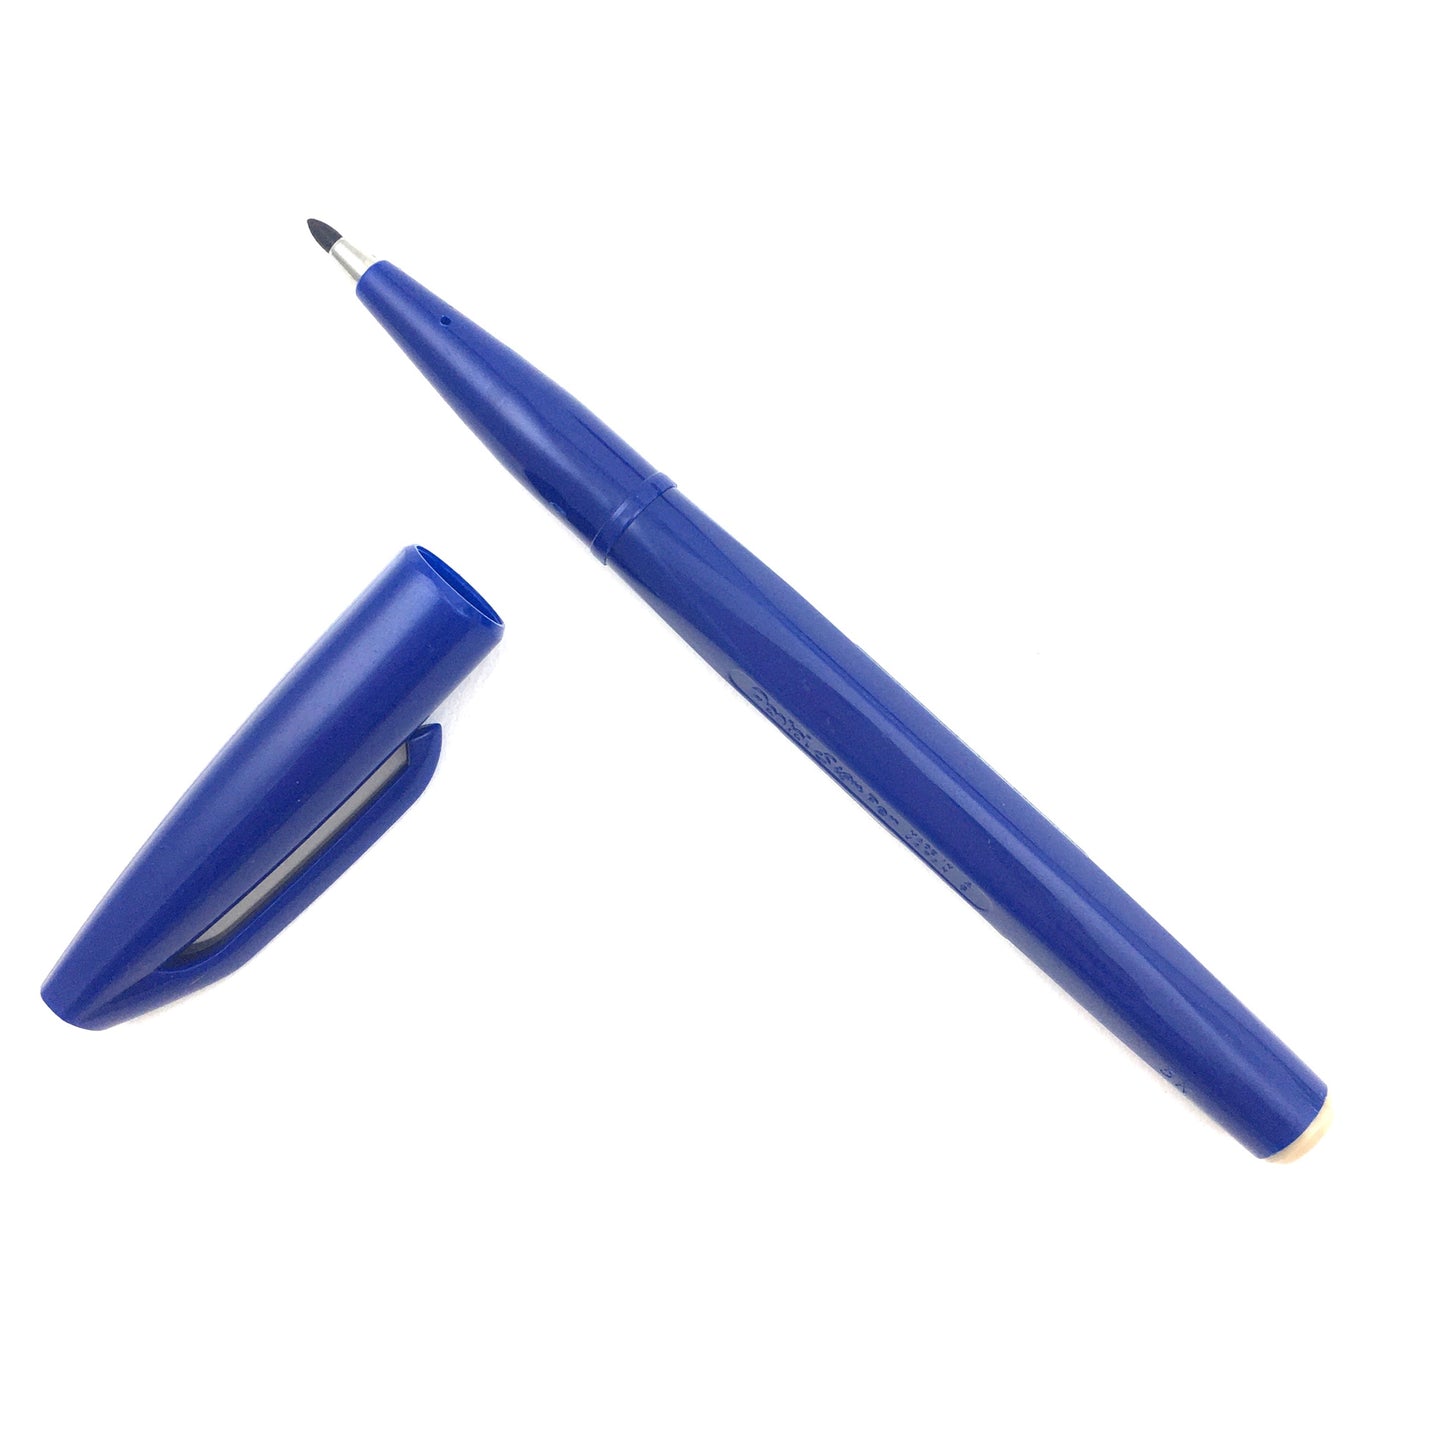 Pentel Sign Pen with Fiber Tip - Blue by Pentel - K. A. Artist Shop